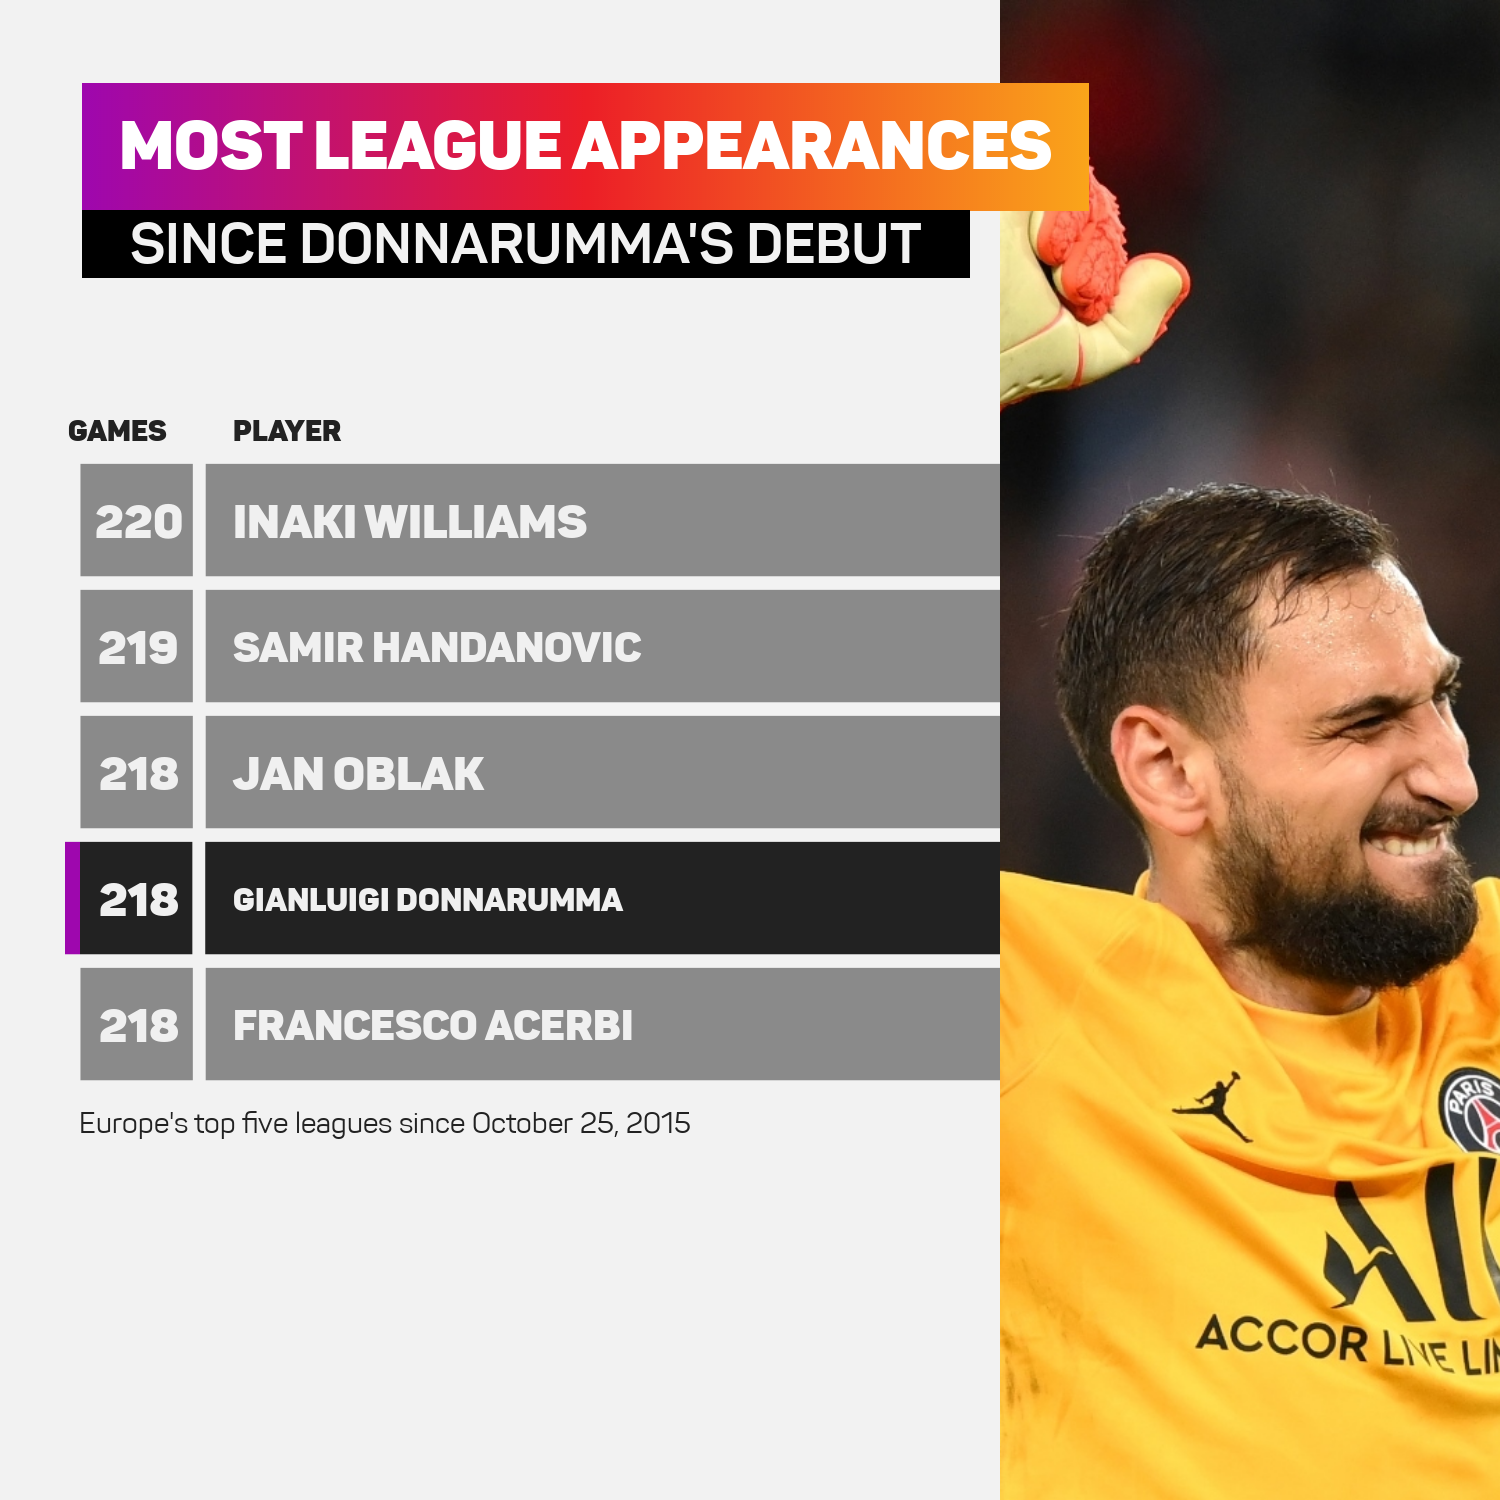 Gianluigi Donnarumma has made 218 league appearances in his career